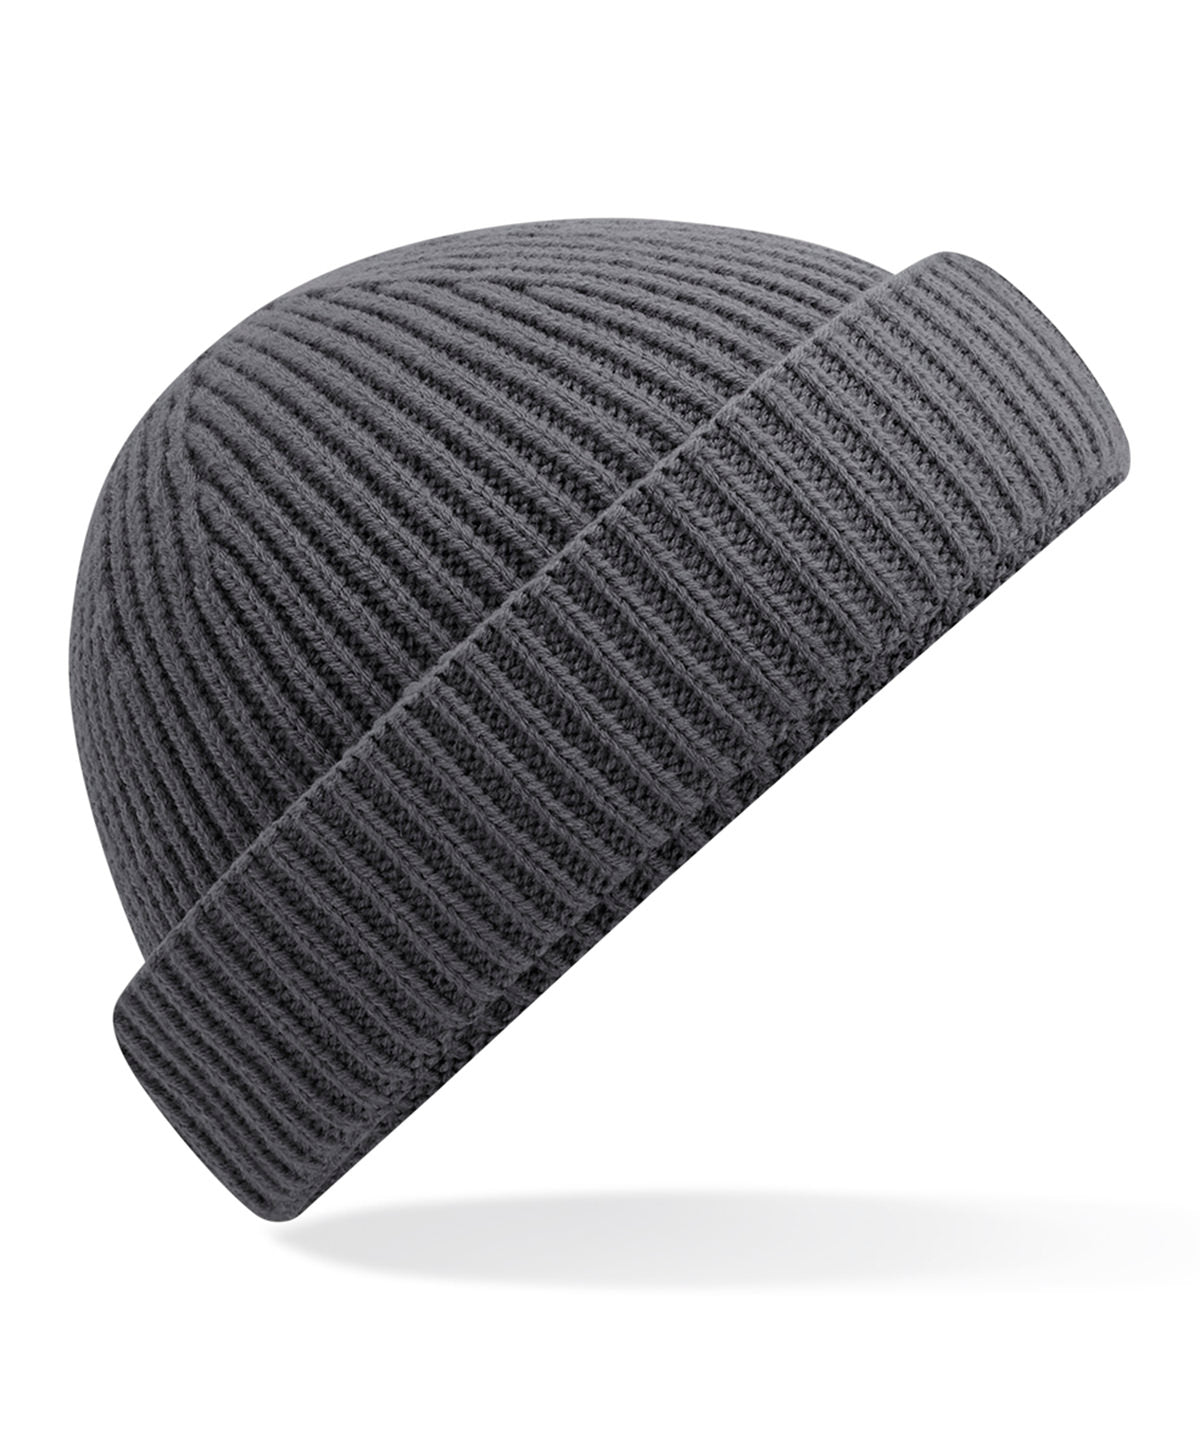 Personalised Hats - Dark Grey Beechfield Harbour beanie